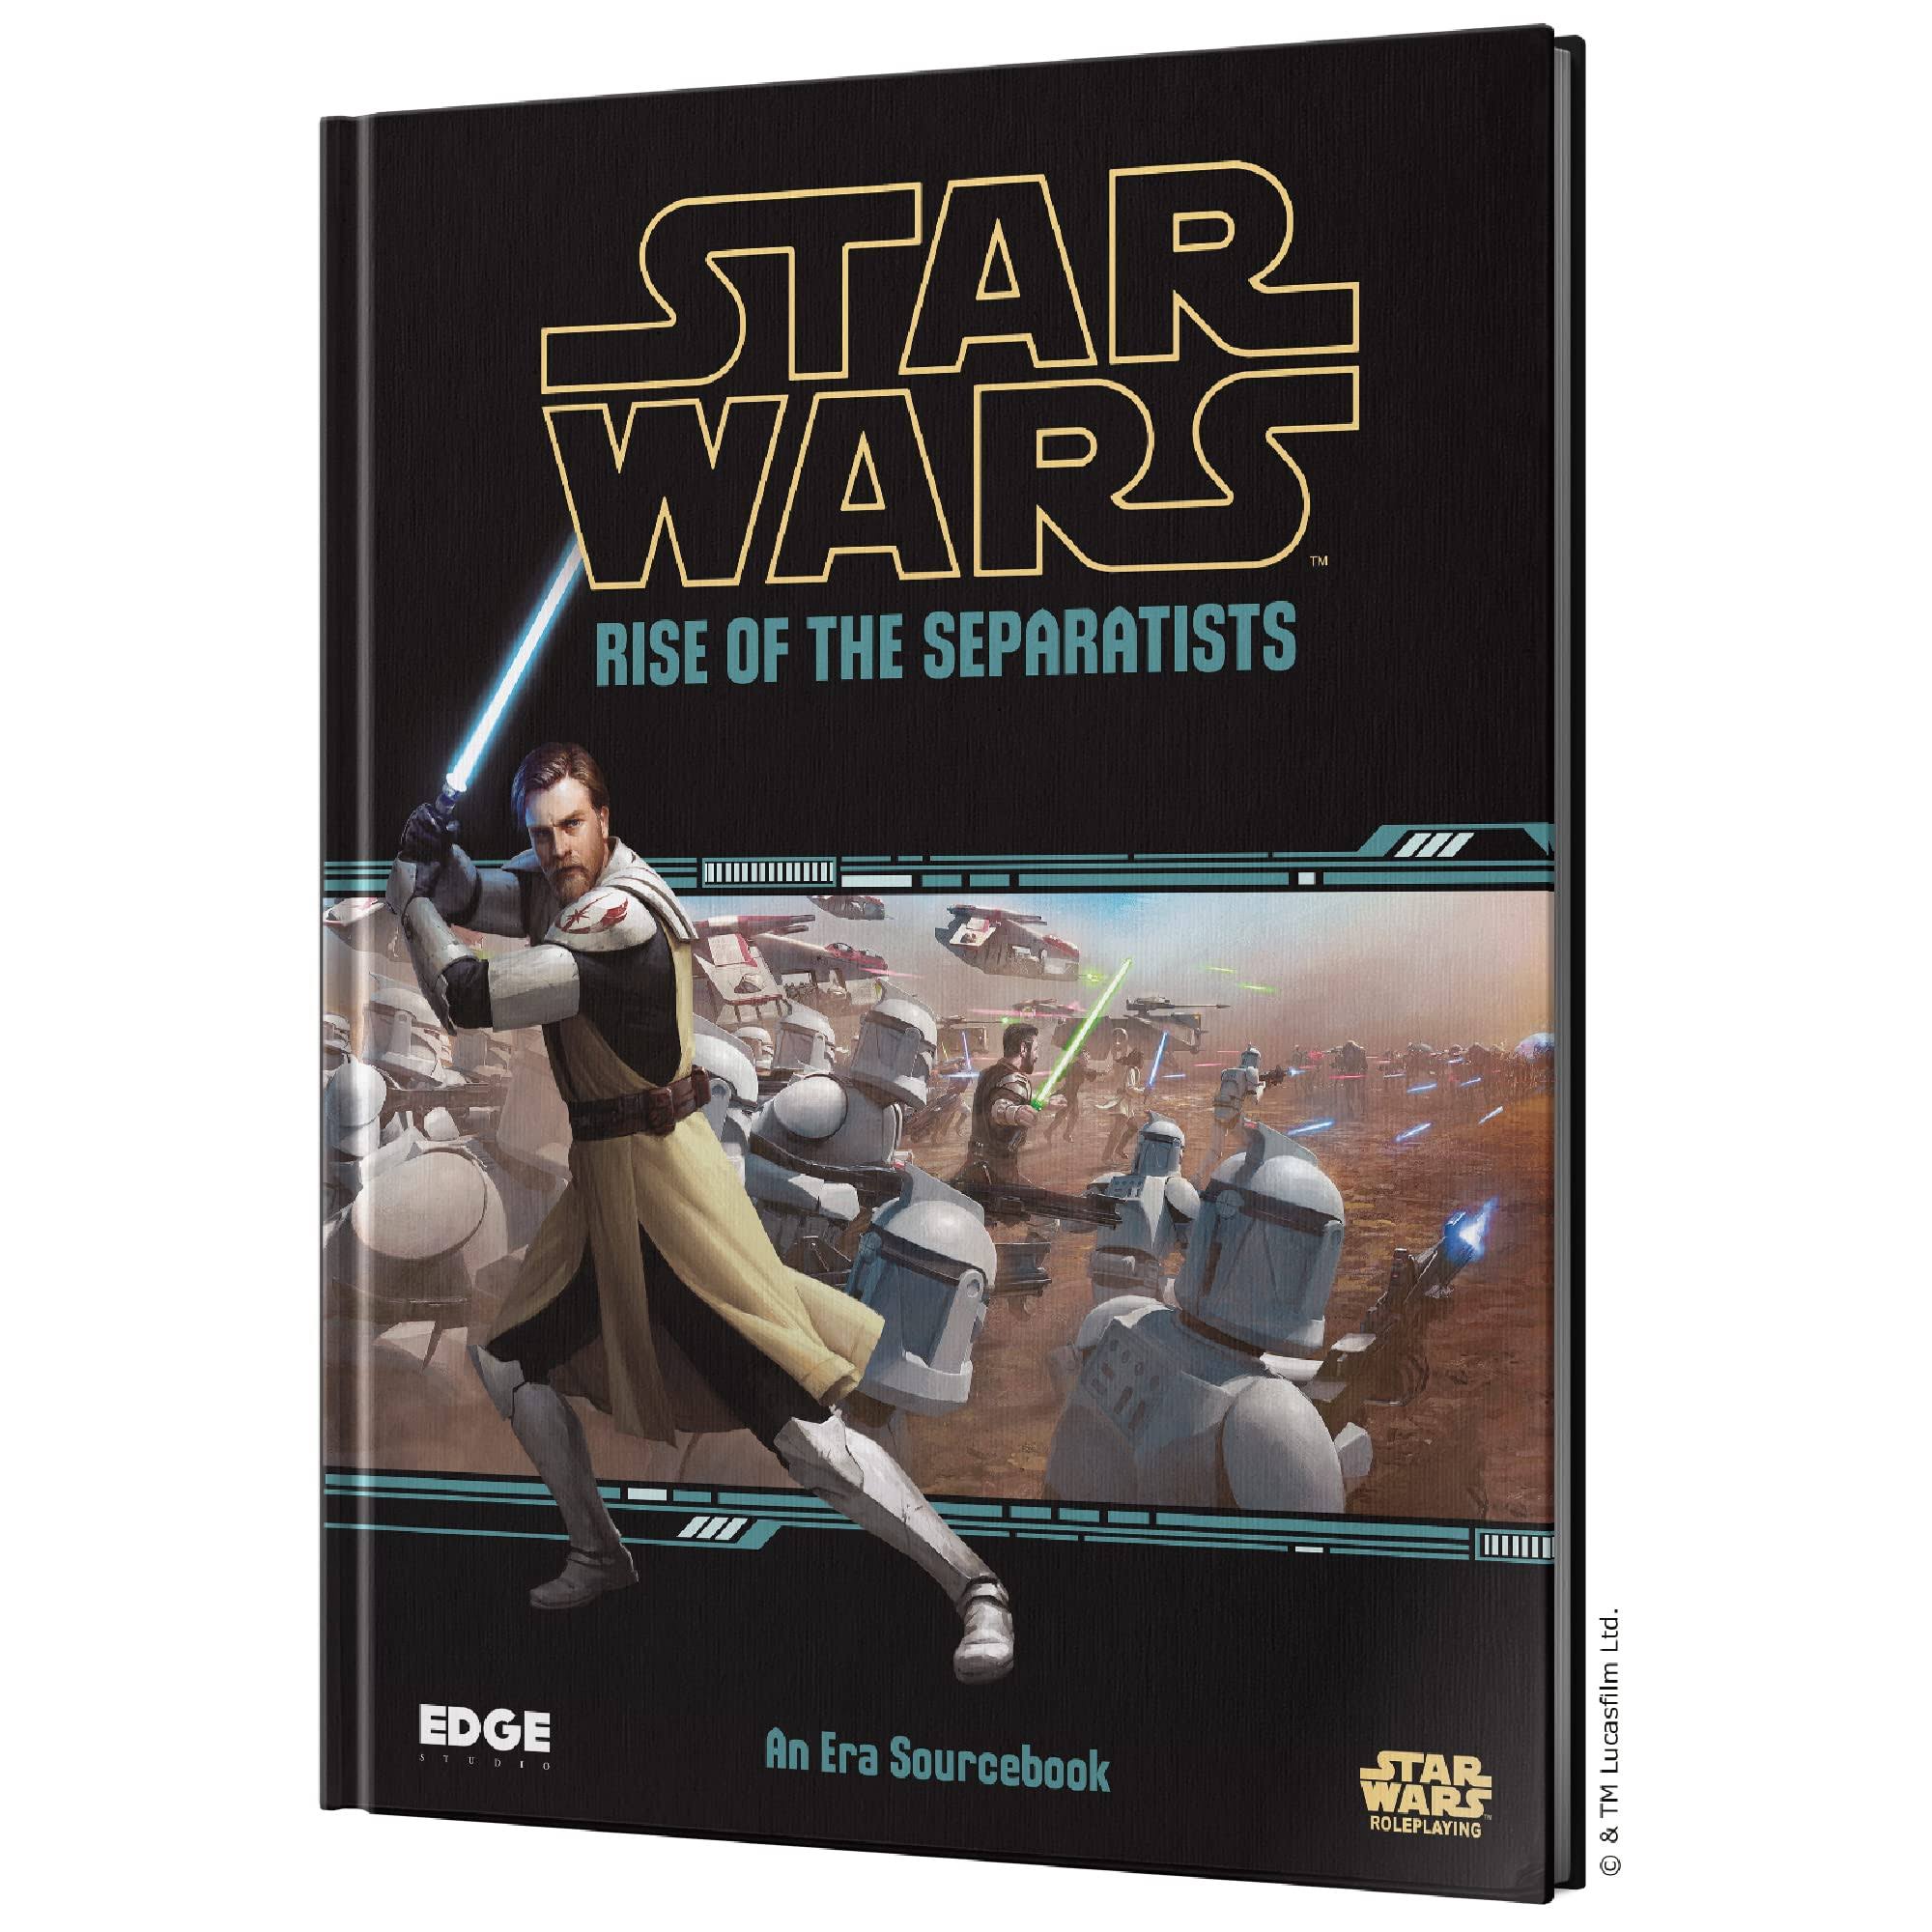 Star Wars RPG: Rise of the Separatists Sourcebook (Edge Studio Edition)